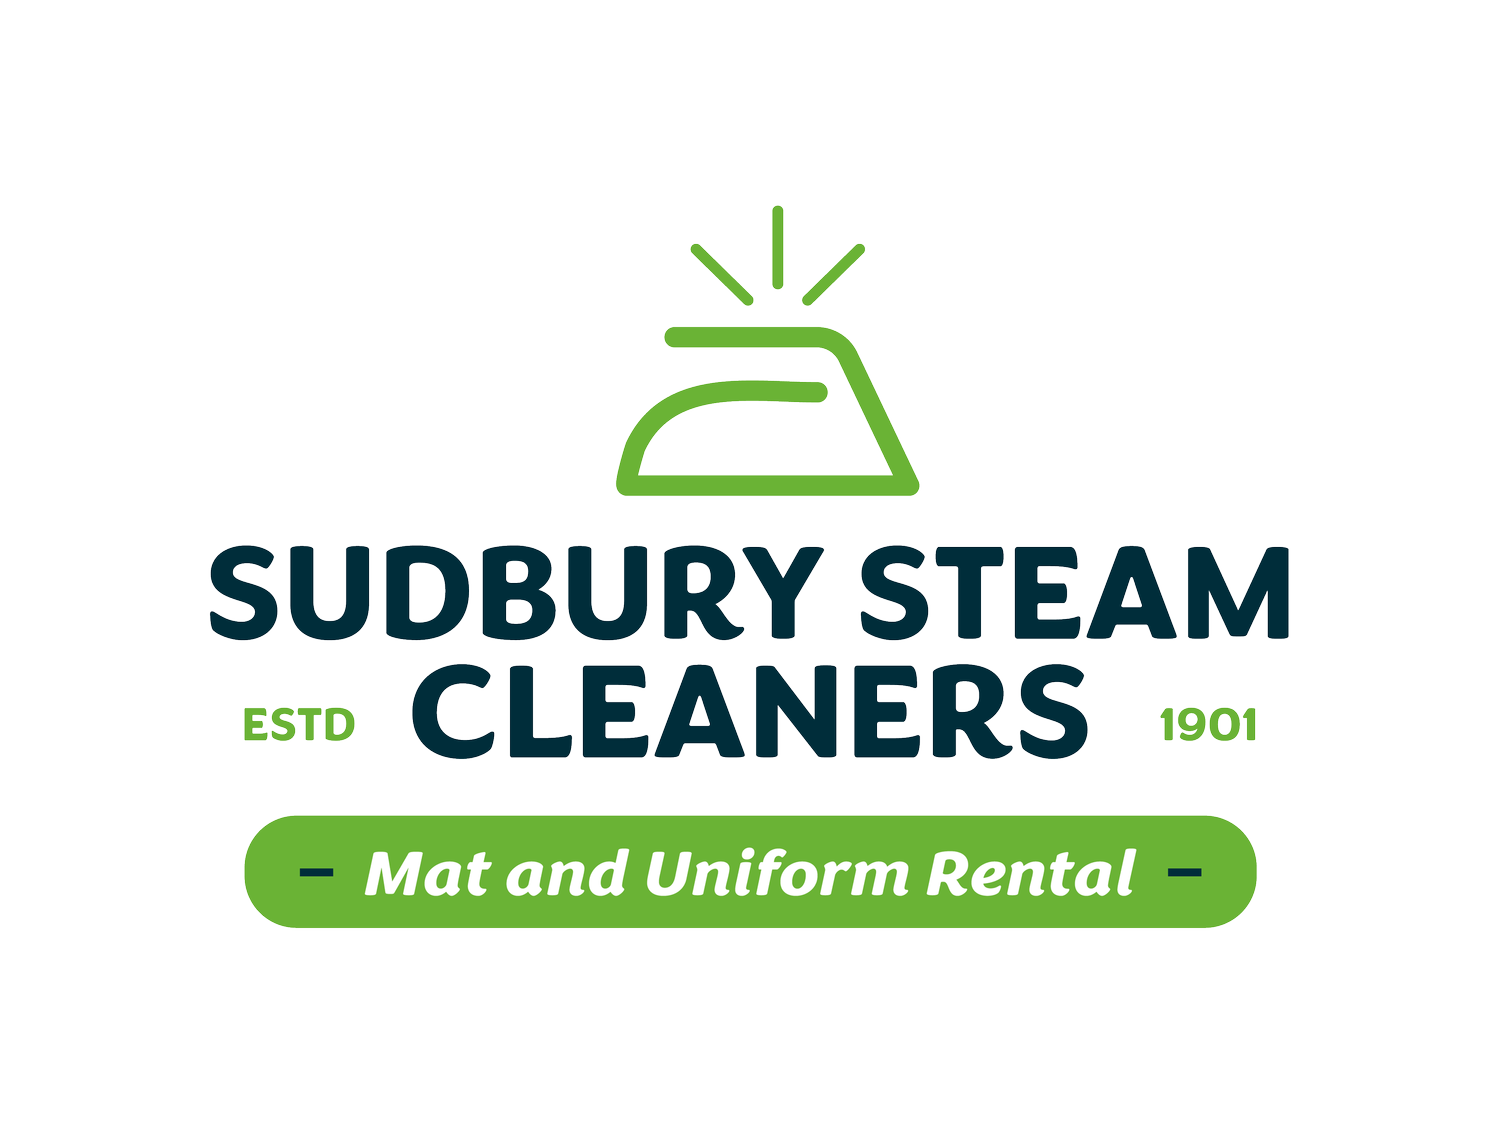 Sudbury Steam Cleaners Mat and Uniform Rental